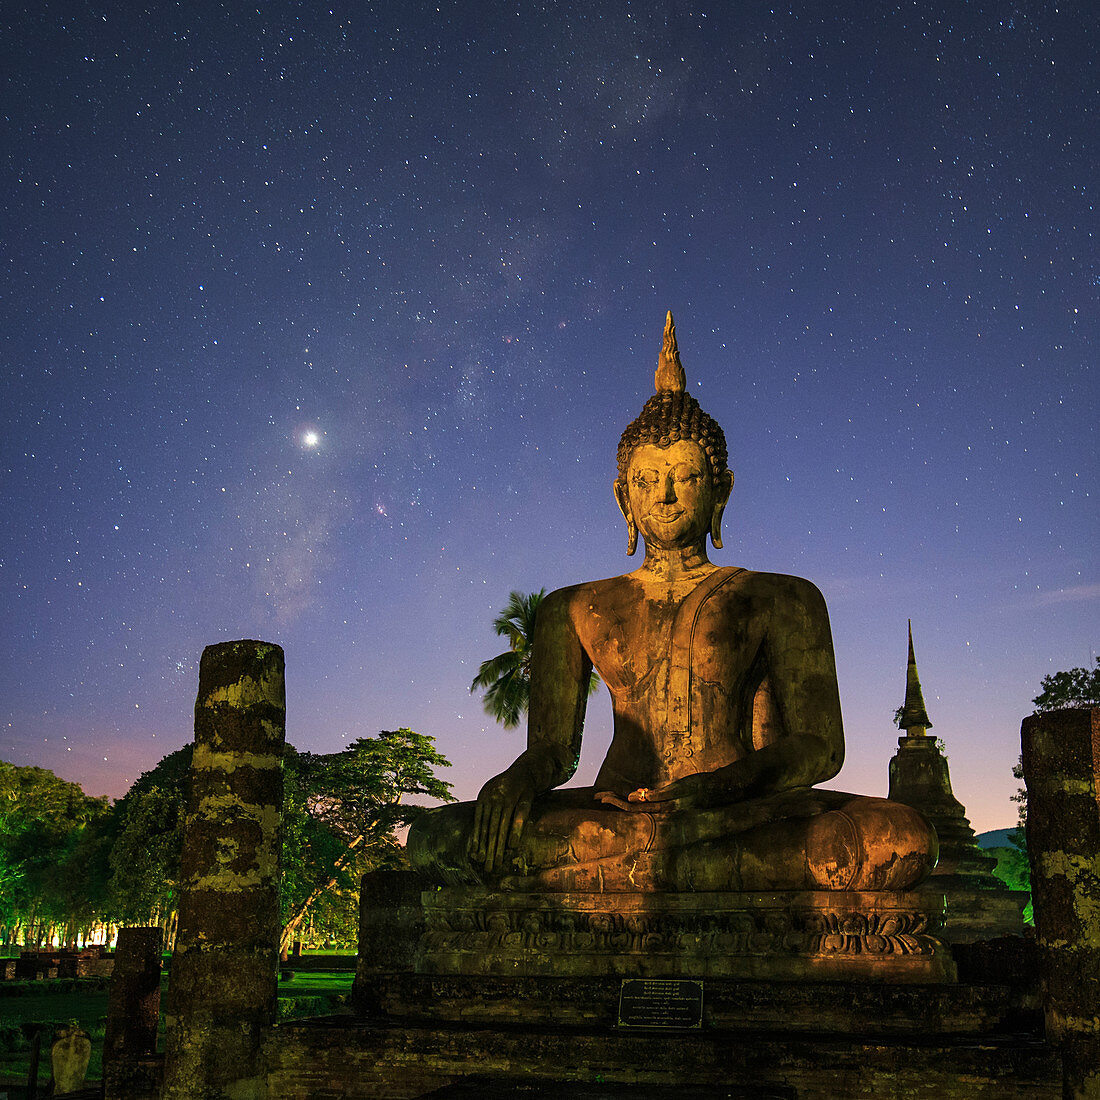 Night sky over Buddha statue, Thailand